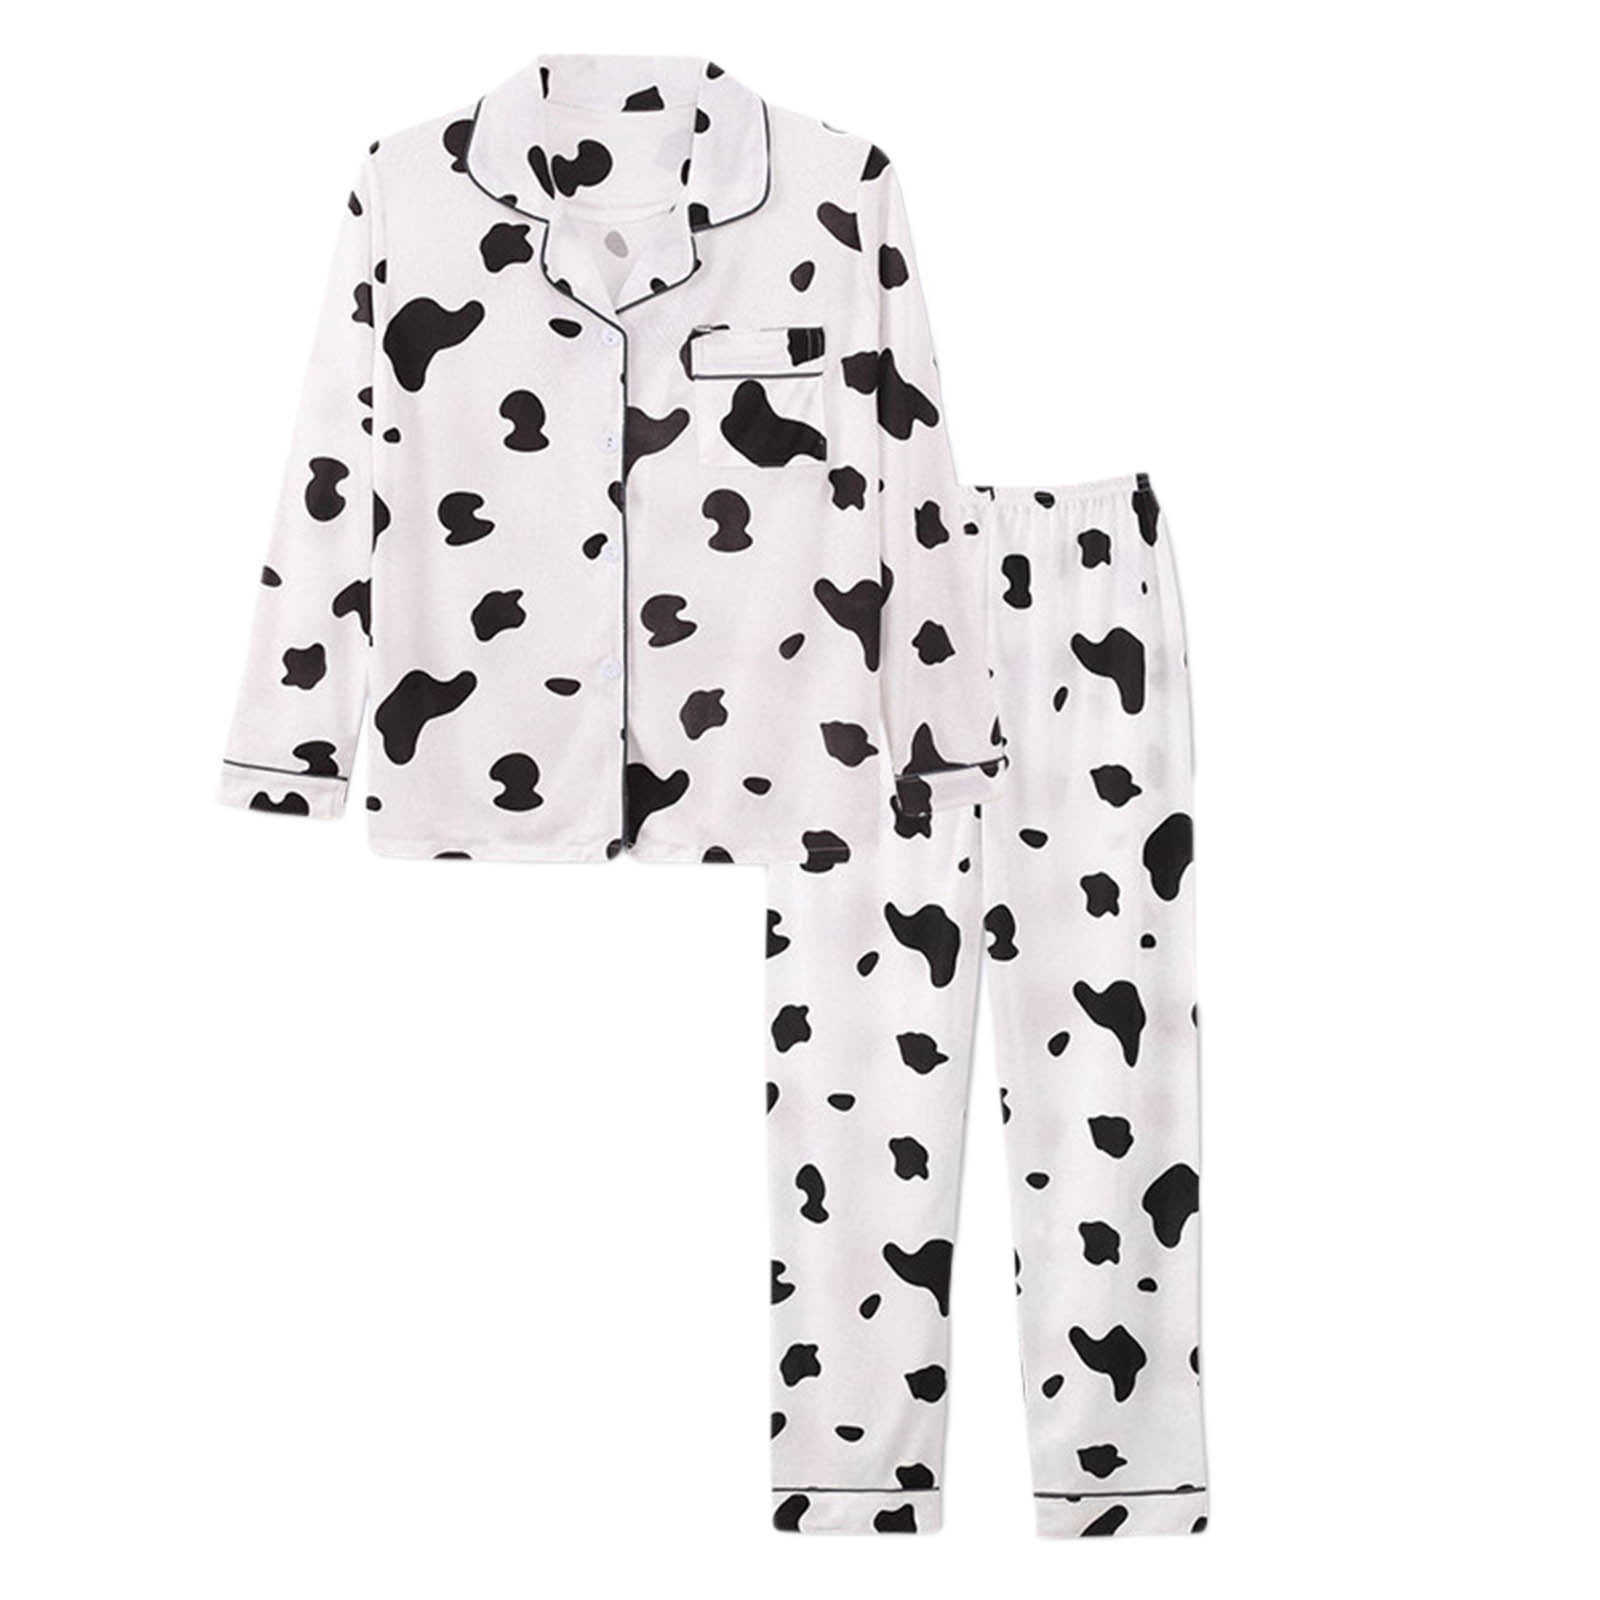 cllios Cow Print Pajamas Sets for Women Casual Lapel Button Down ...